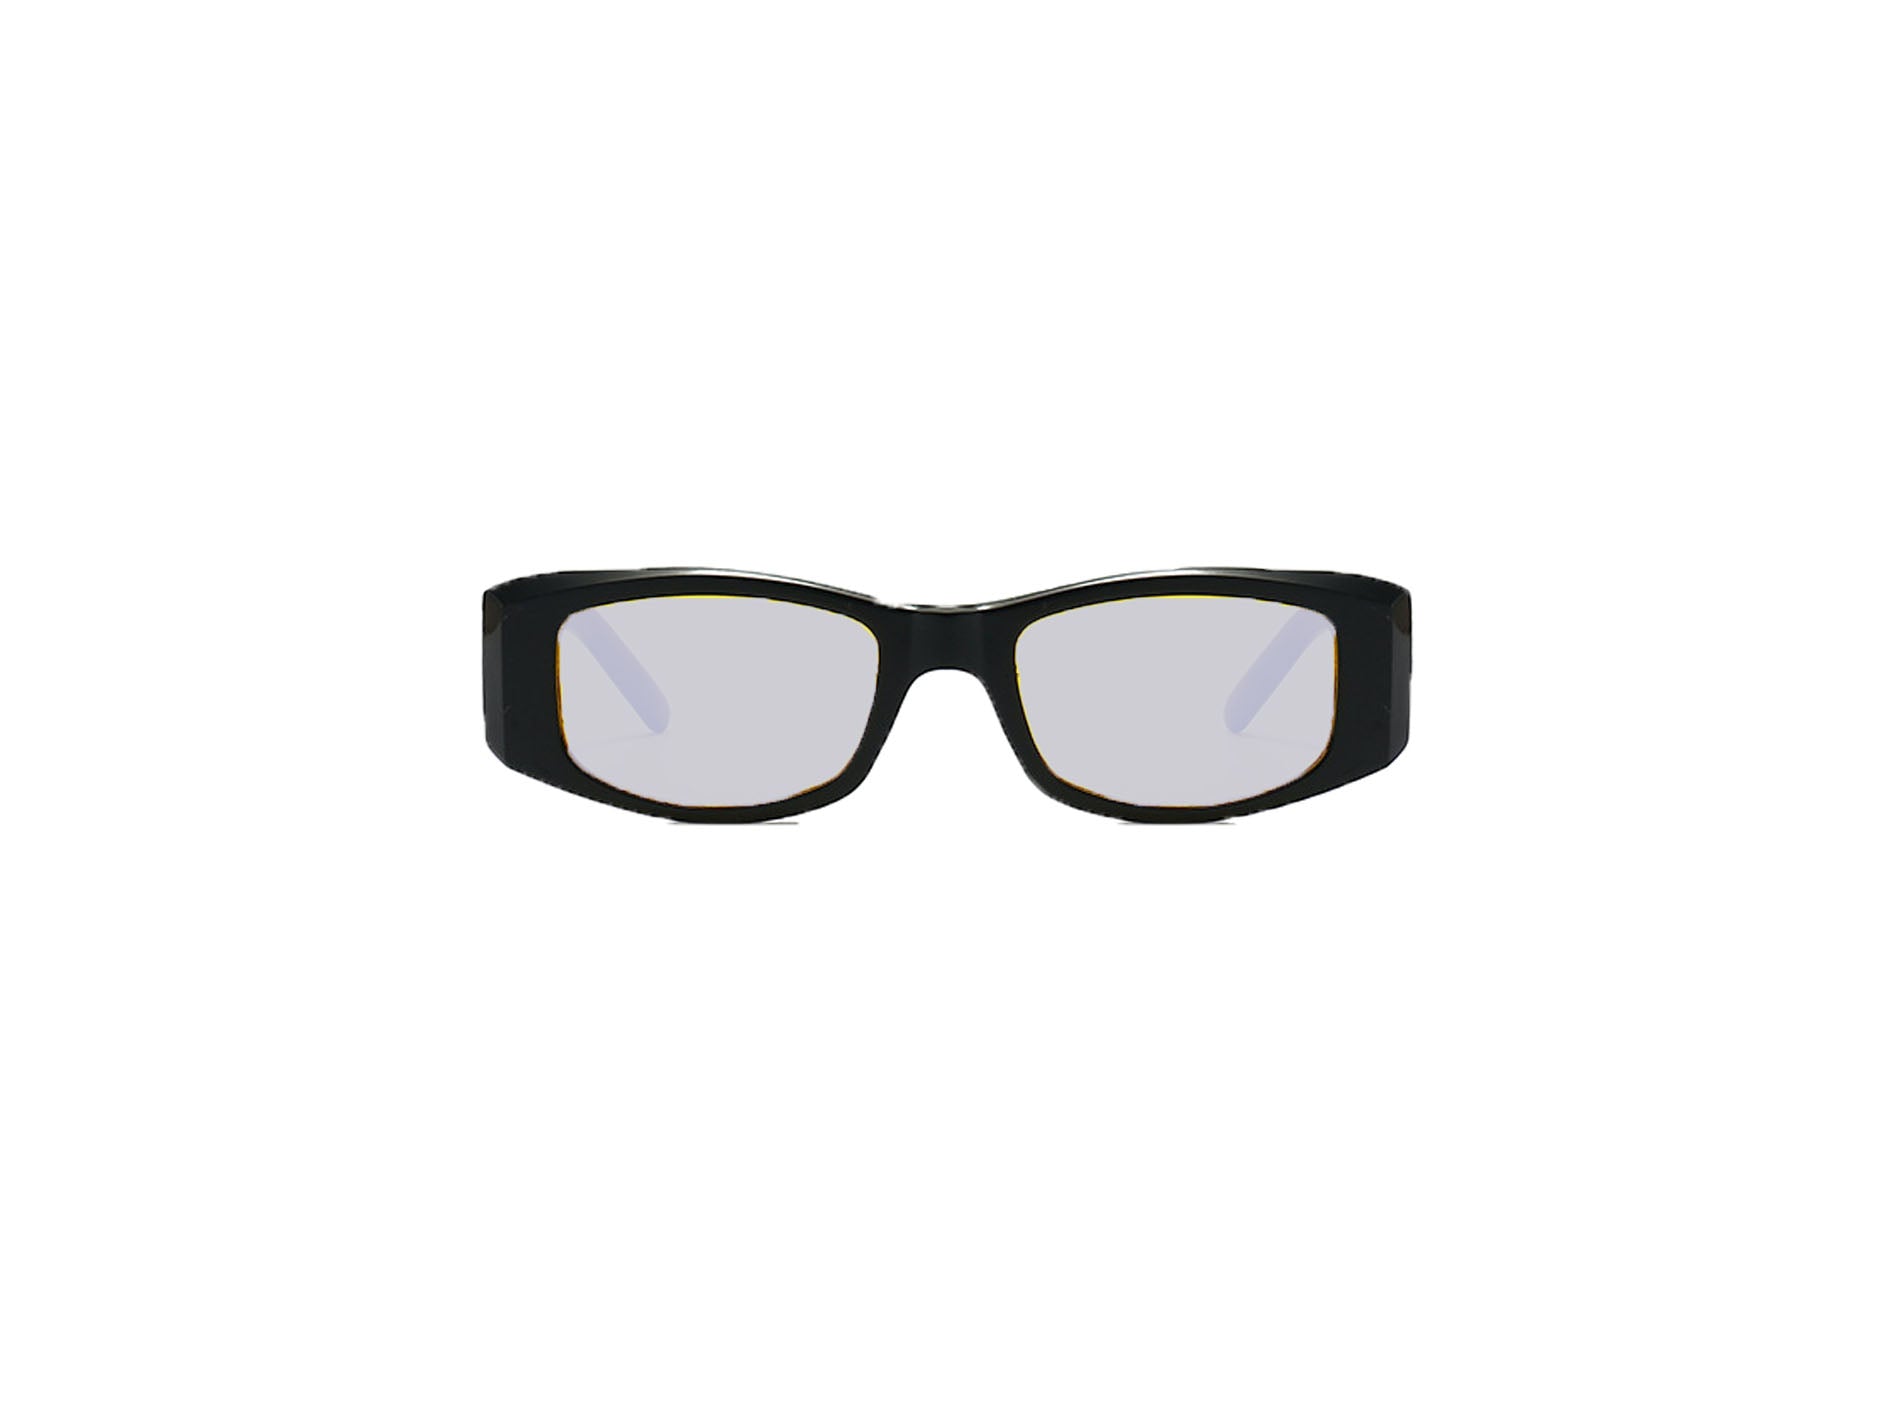 Authenticity Badmood Sunglasses